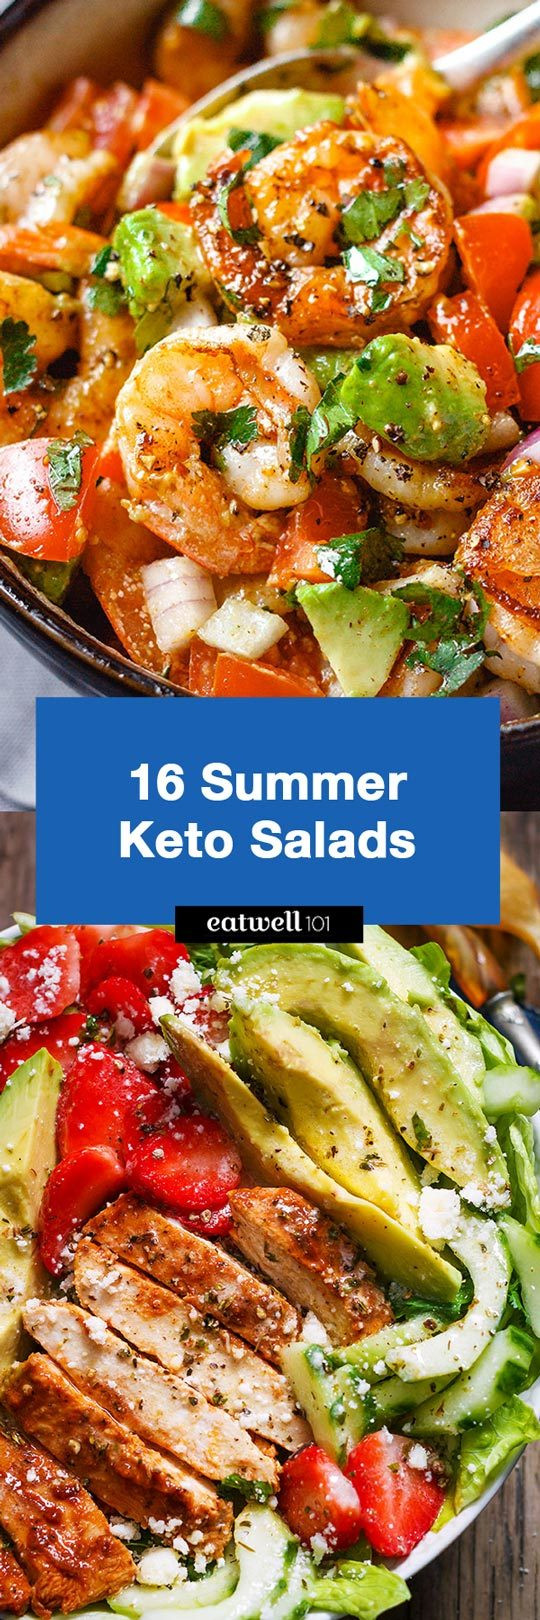 Summer Keto Meals
 Keto Salad Recipes 16 Best Summer Keto Salad Recipes